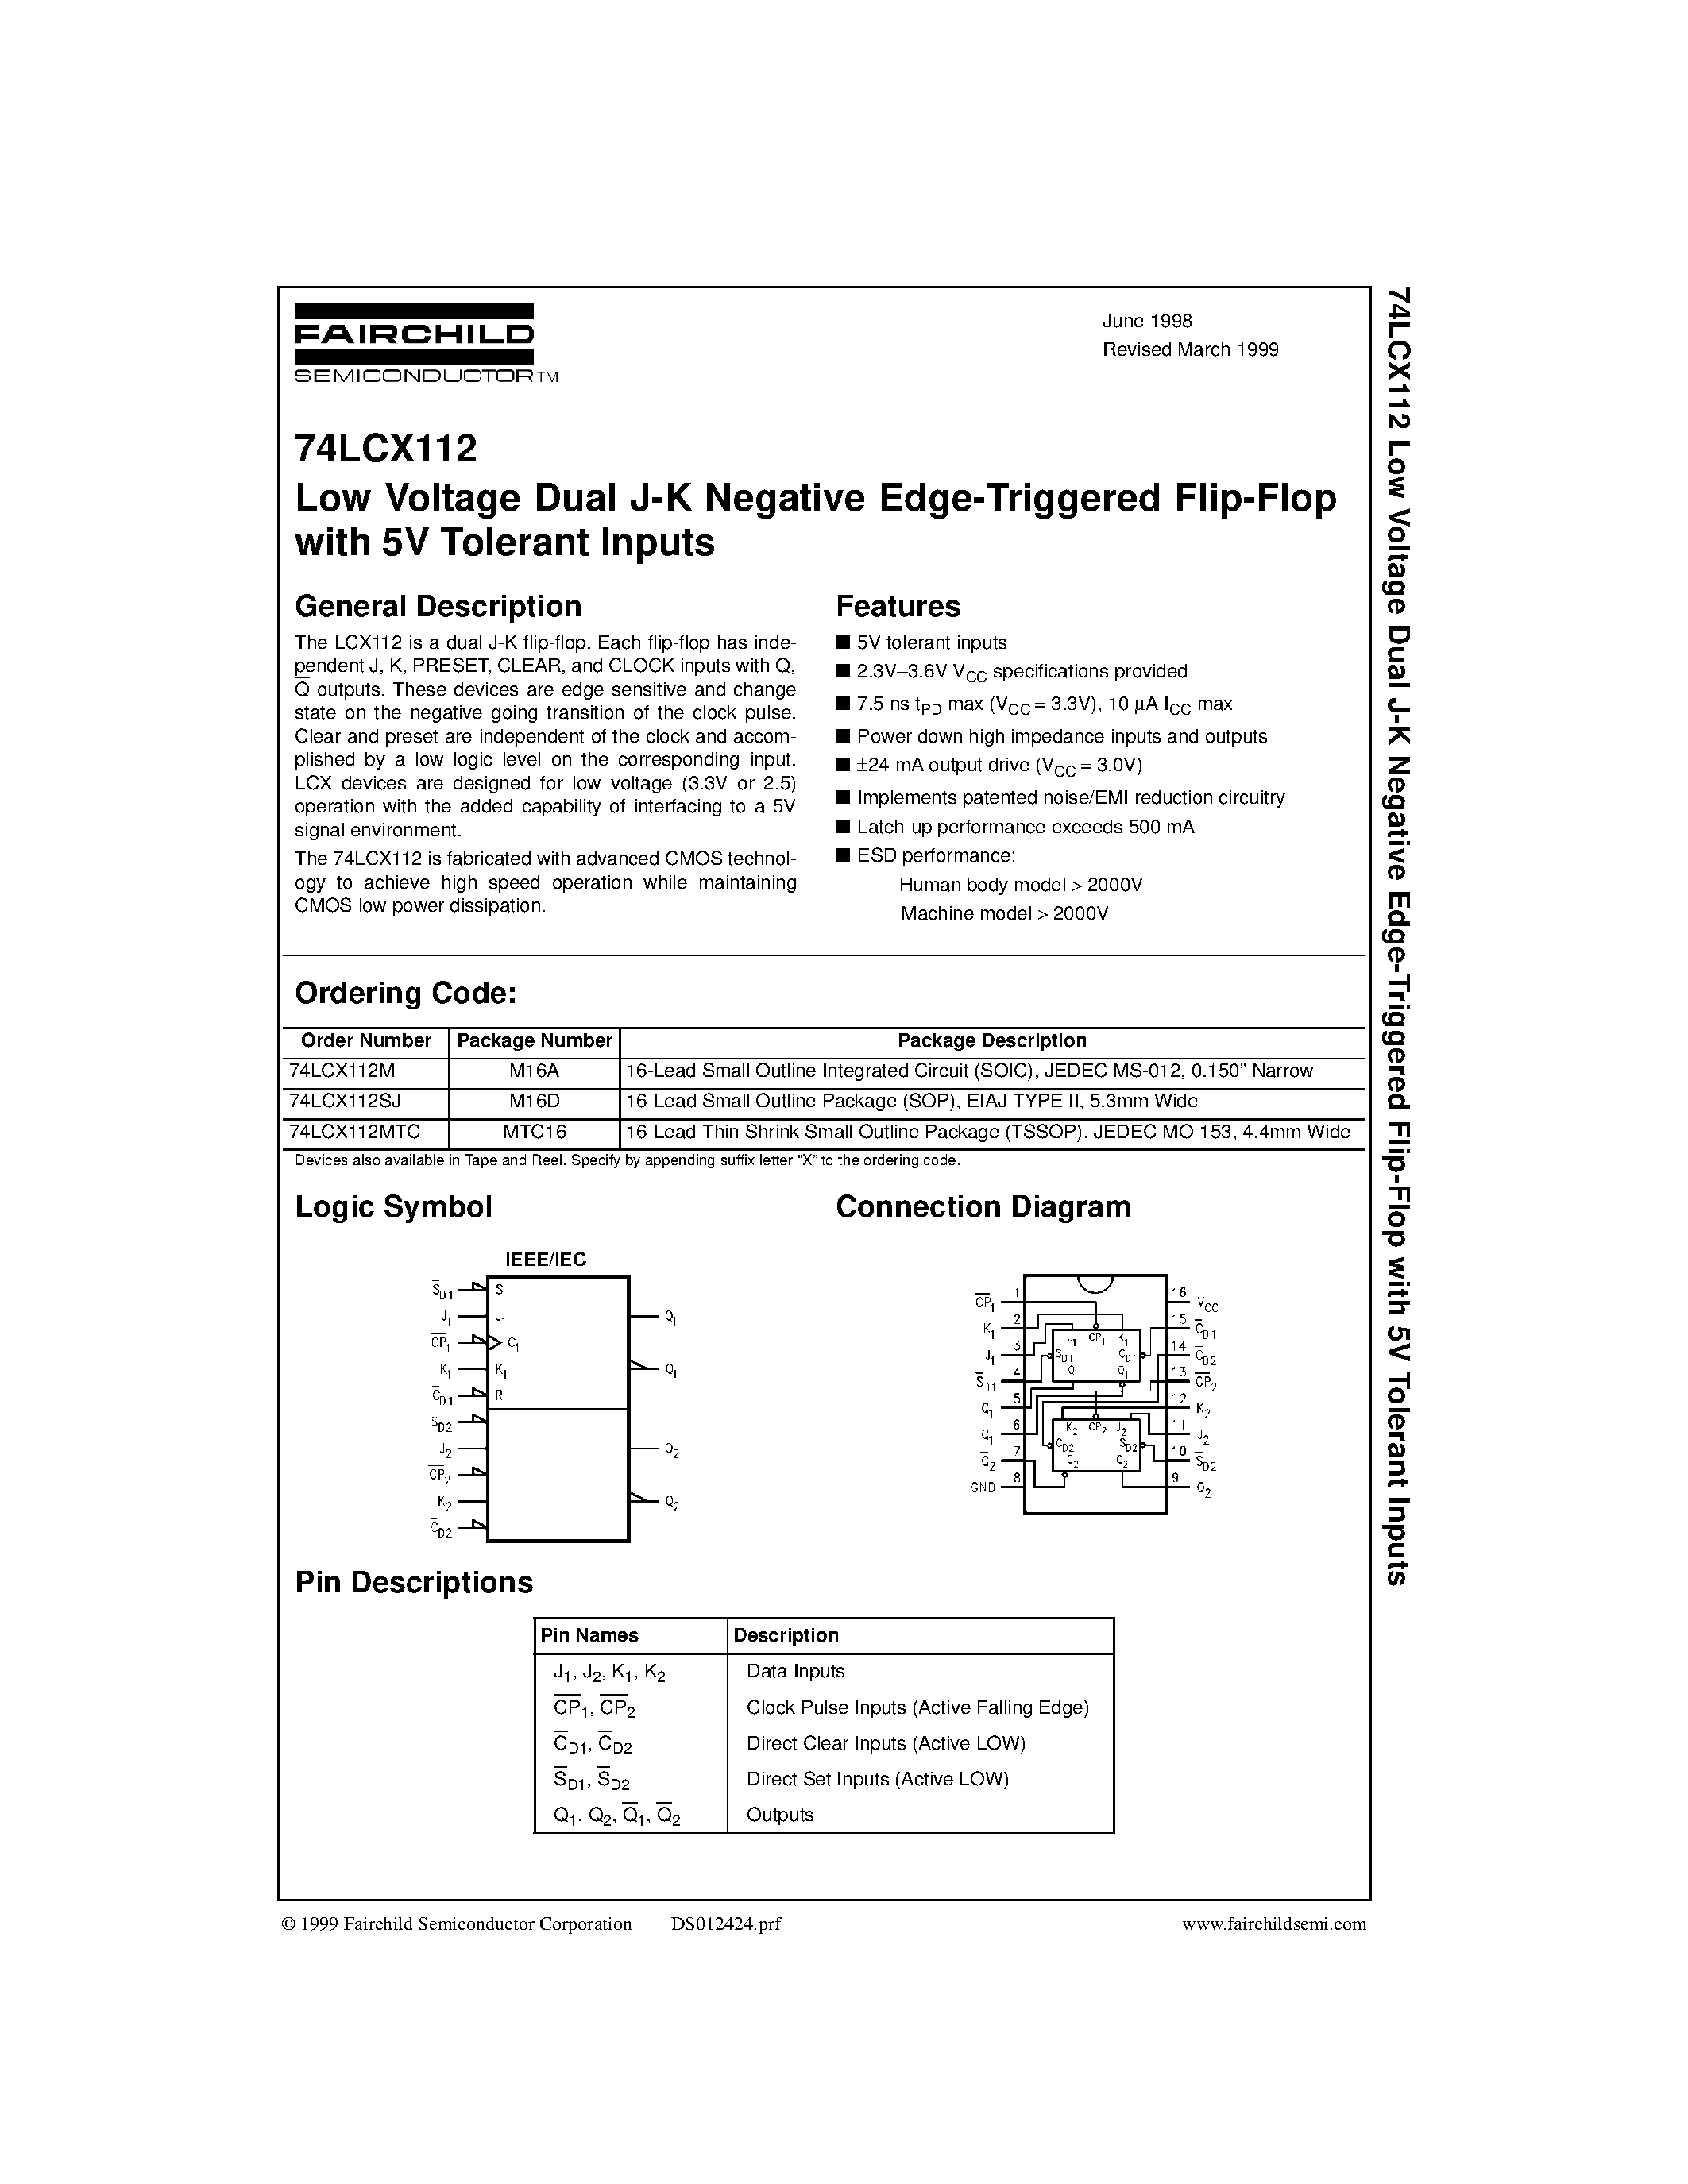 Даташит 74LCX112SJ - Low Voltage Dual J-K Negative Edge-Triggered Flip-Flop with 5V Tolerant Inputs страница 1